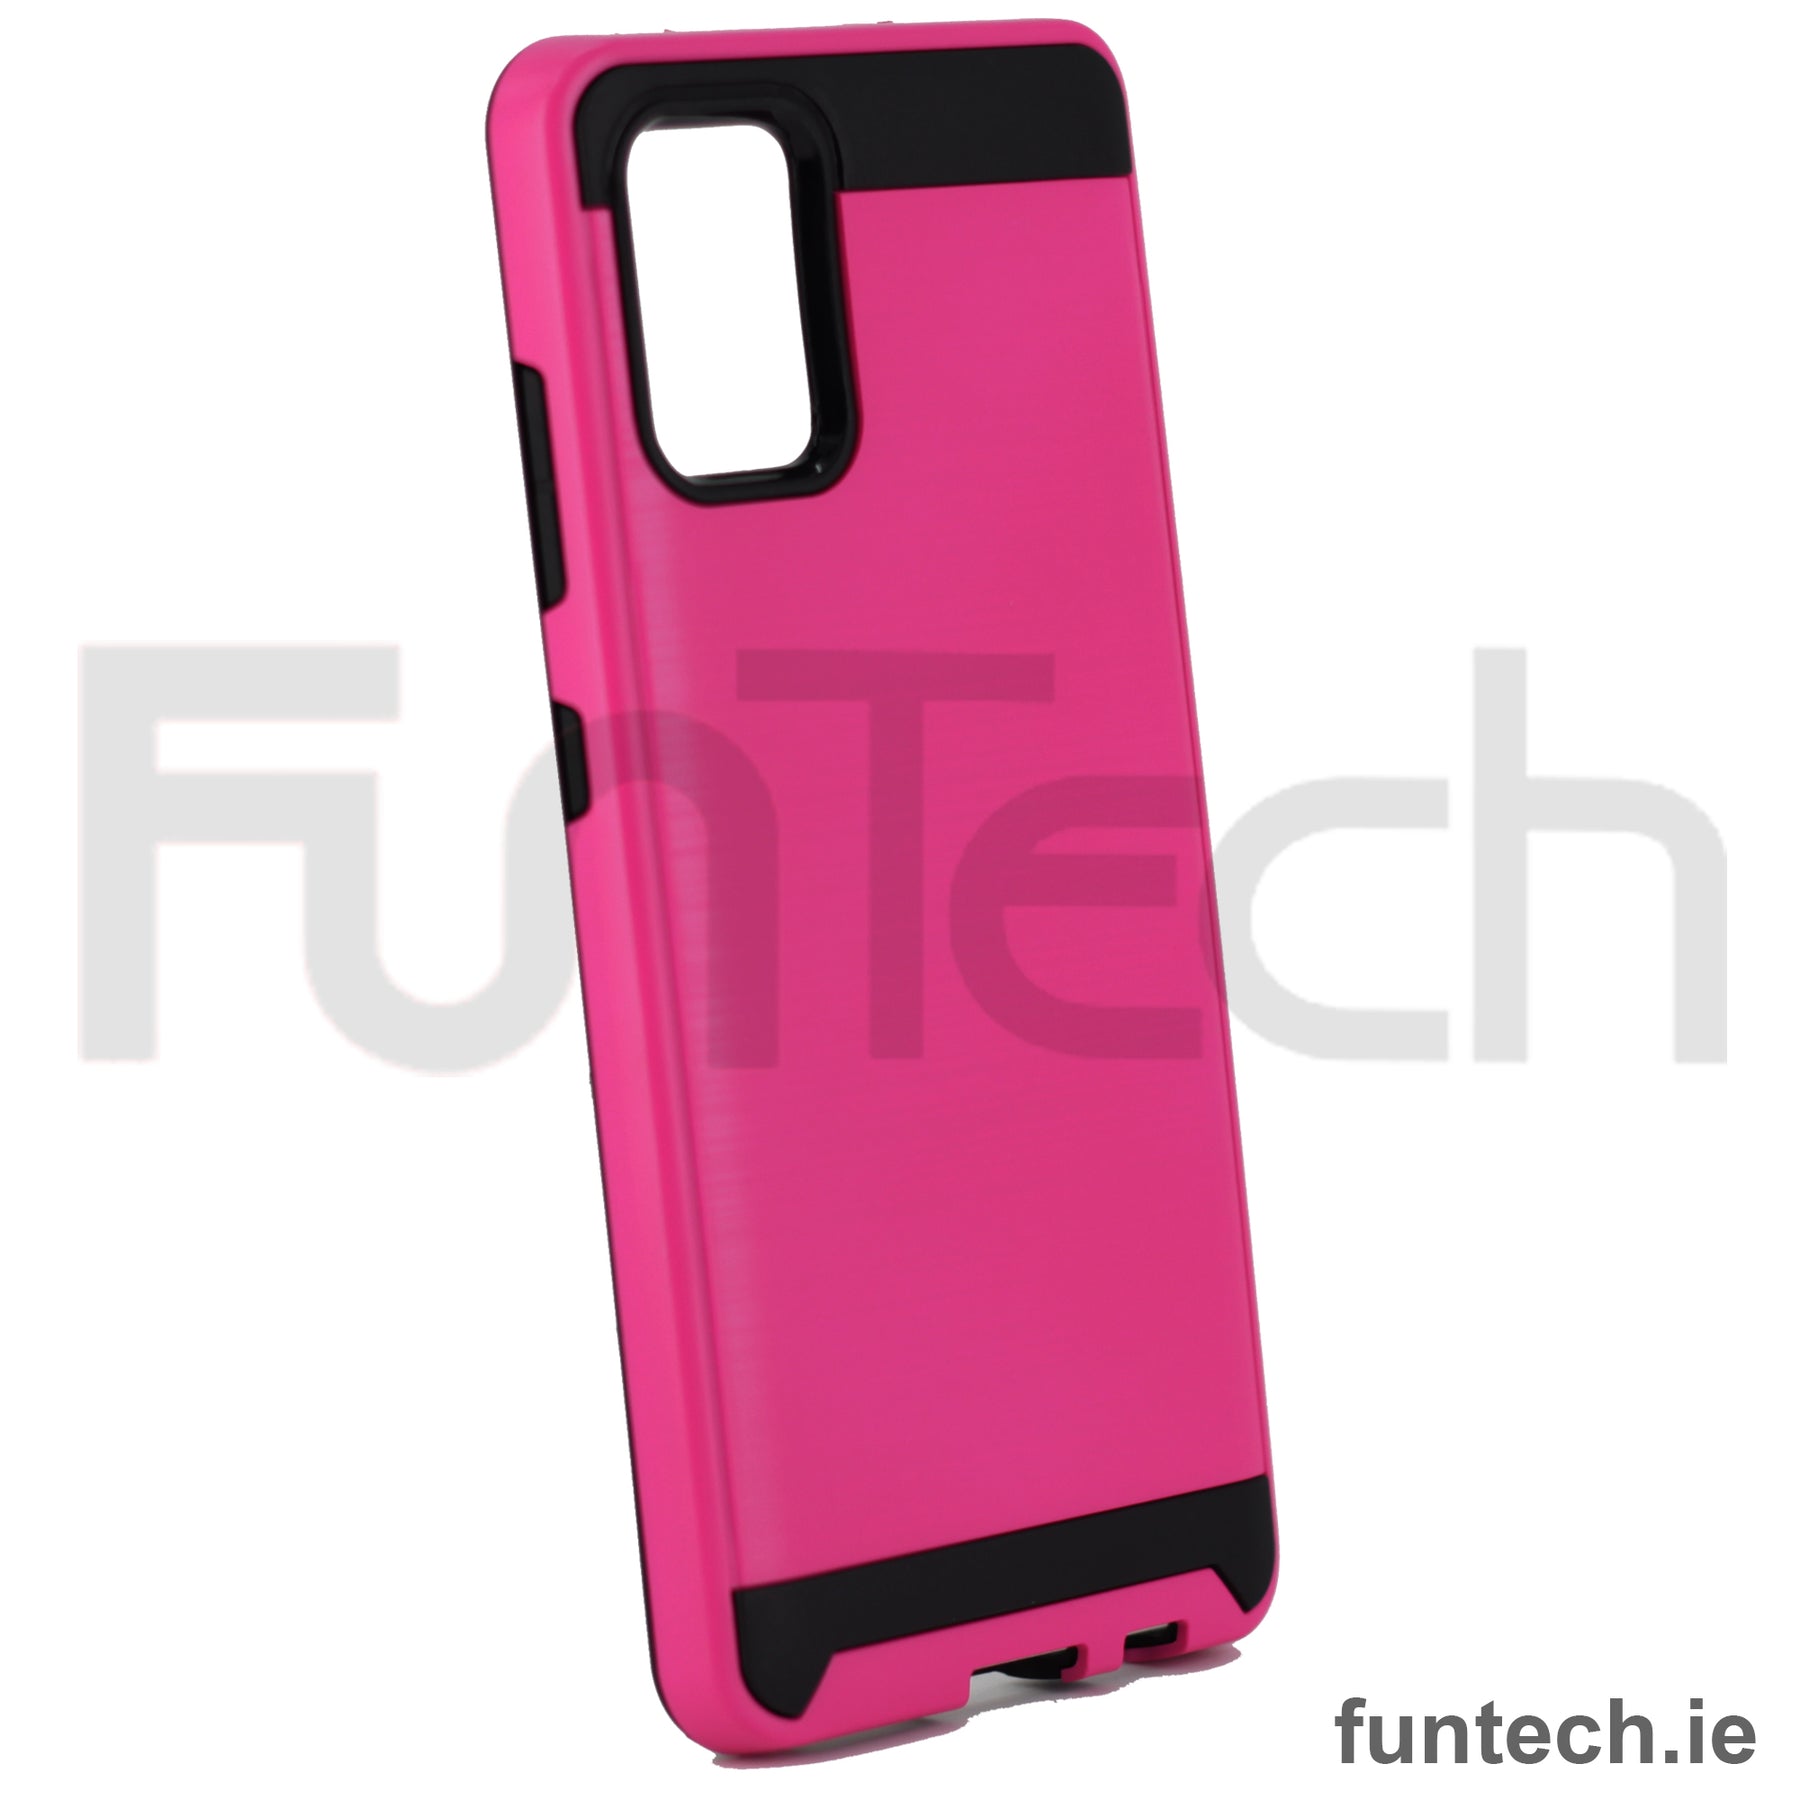 Samsung A51, Slim Armor Case, Color Pink.